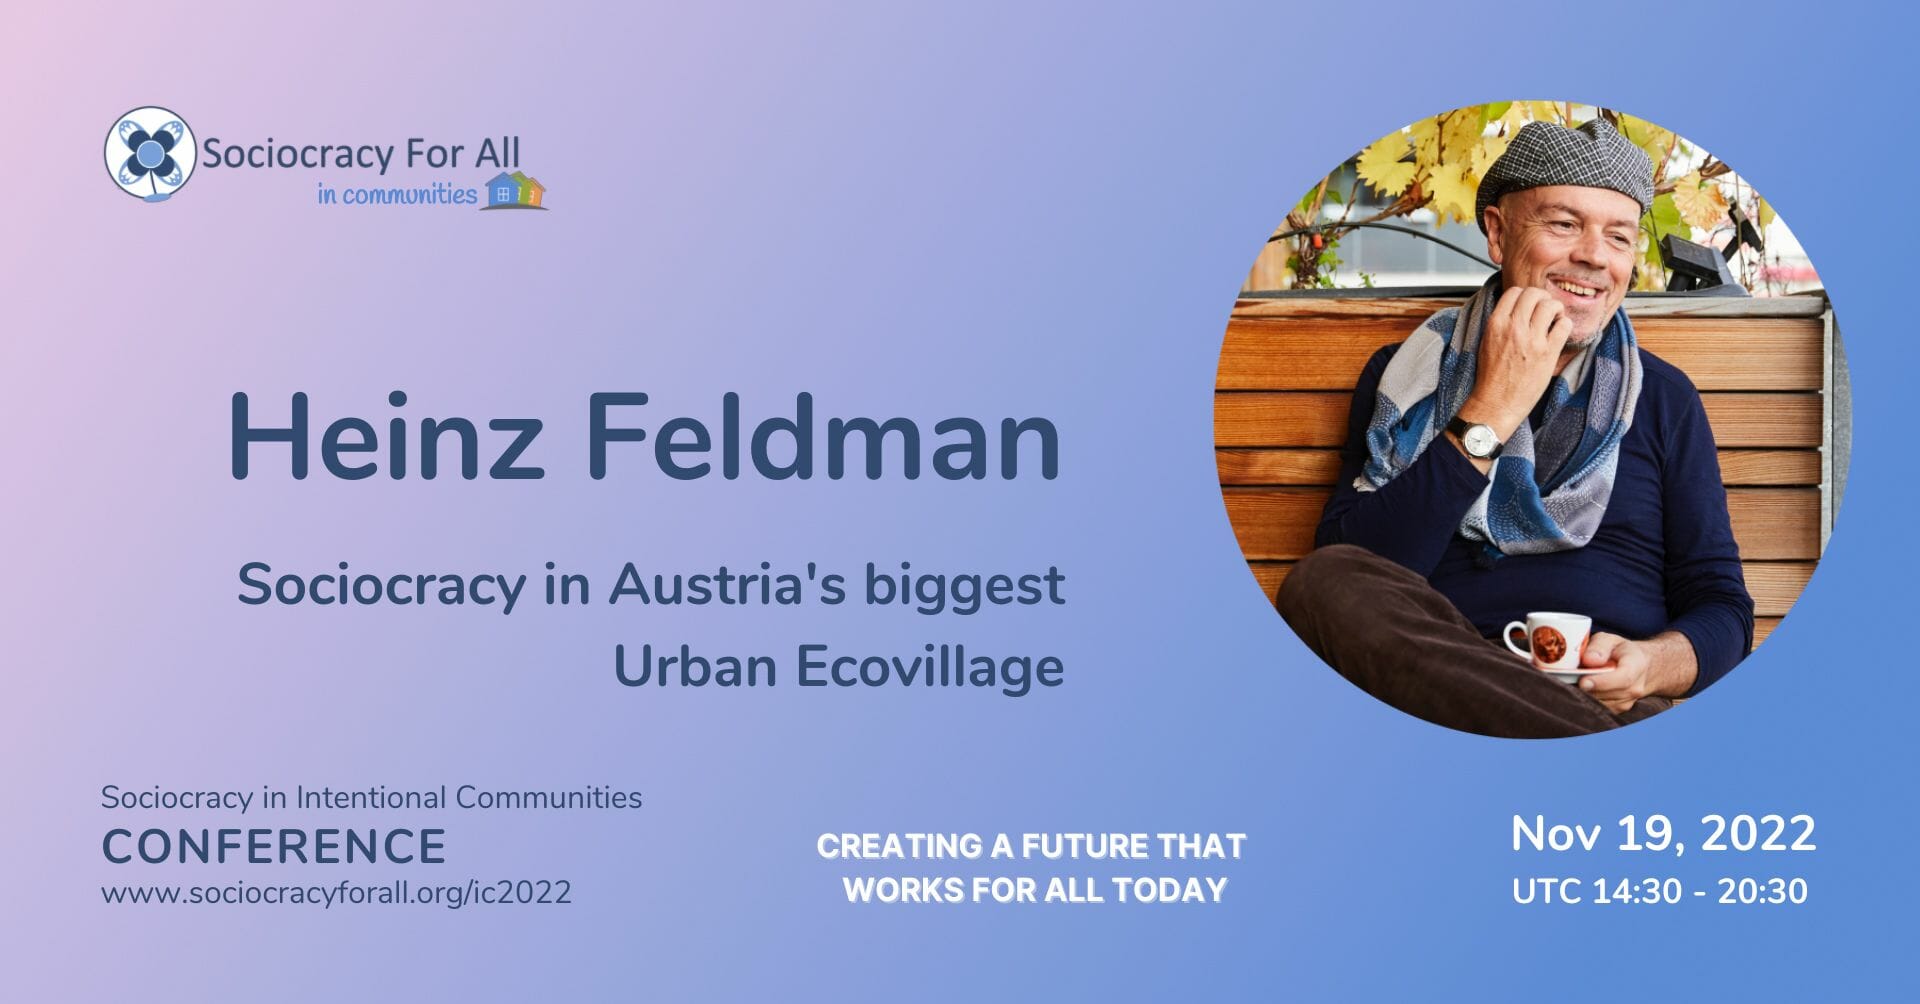 heinz feldman sociocracy in intentional communities conference 2022 - - Sociocracy For All